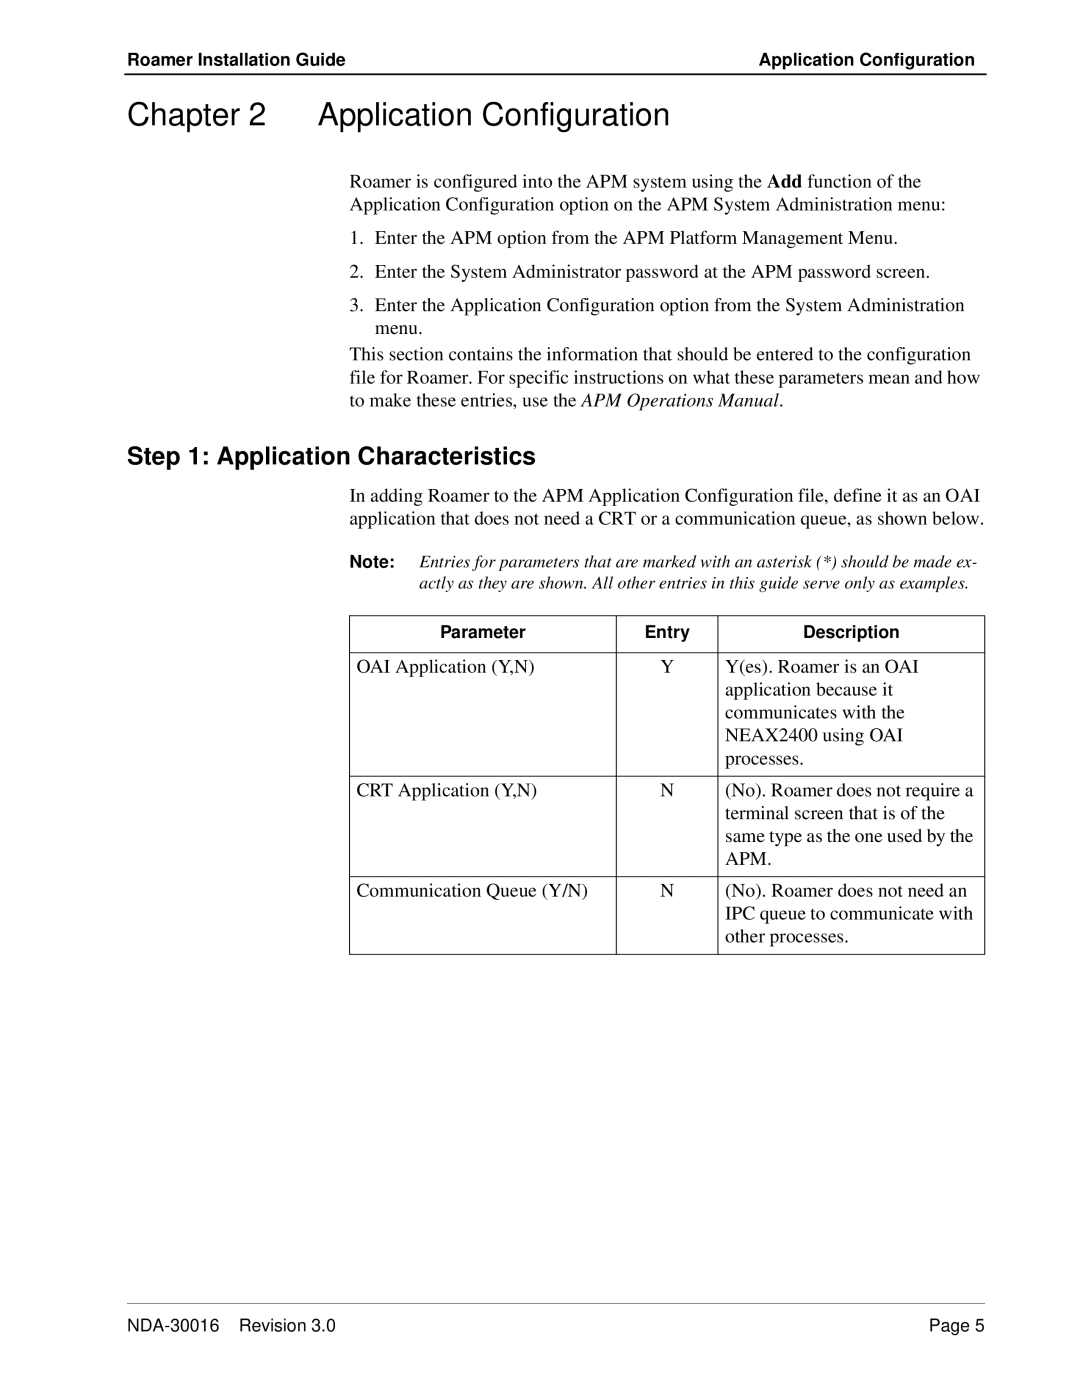 NEC NDA-30016-003 manual Application Configuration, Application Characteristics 